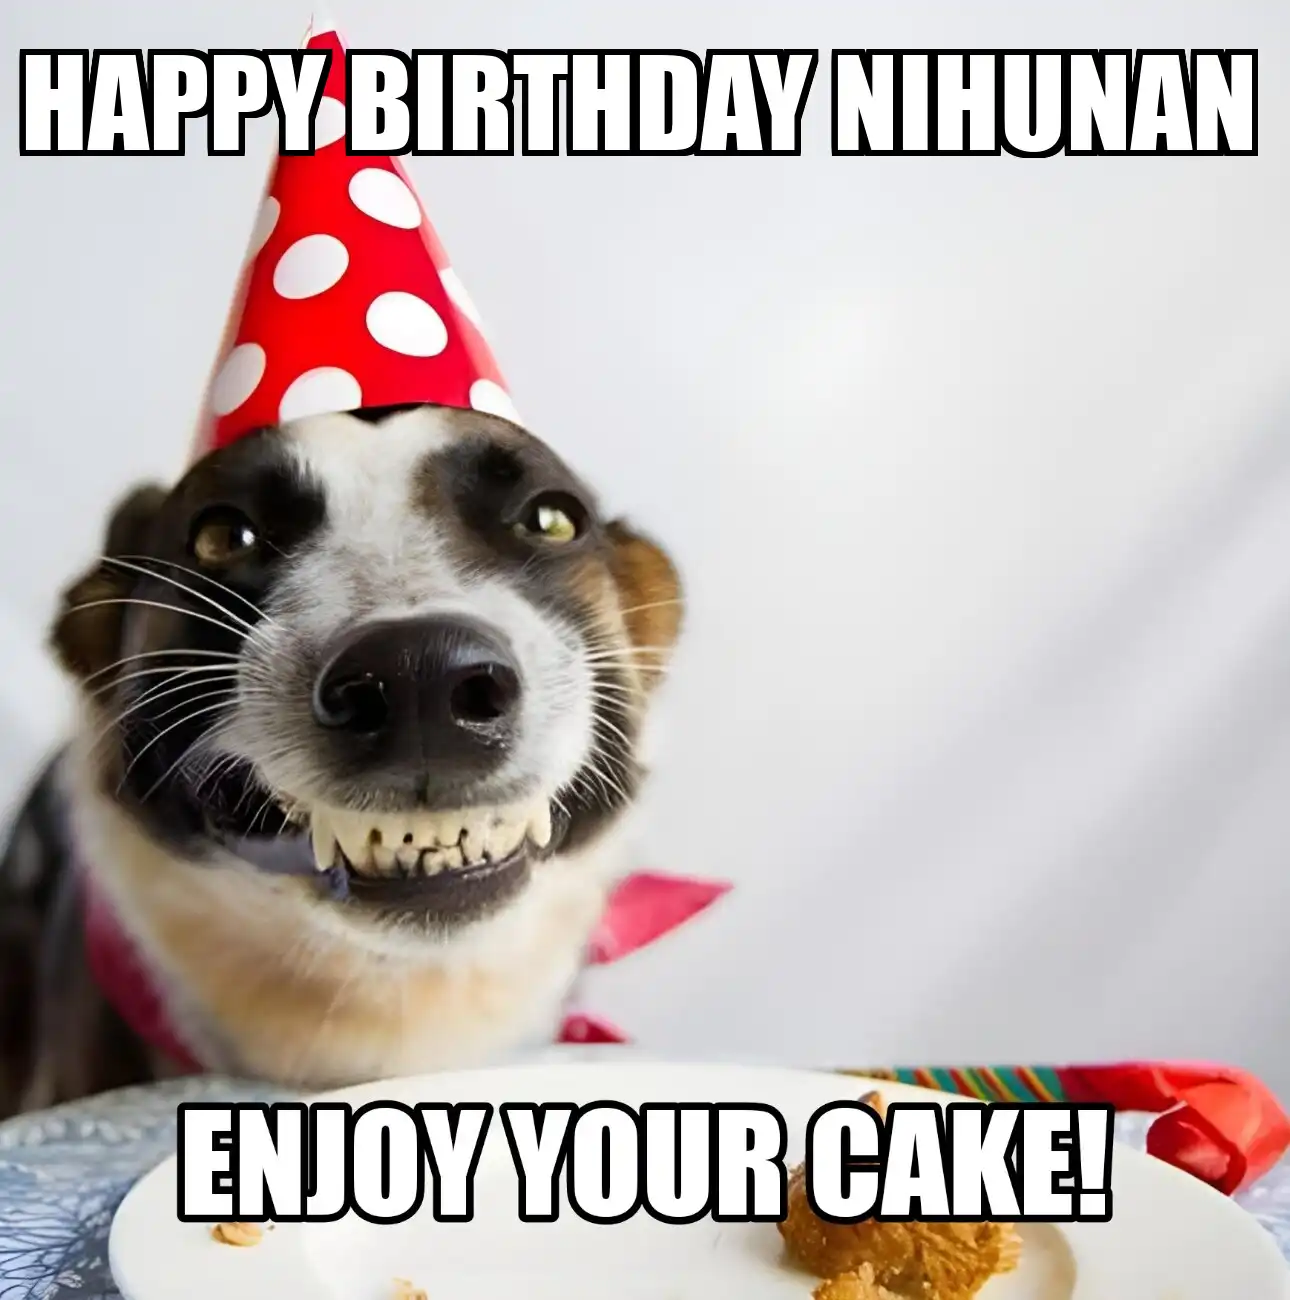 Happy Birthday Nihunan Enjoy Your Cake Dog Meme